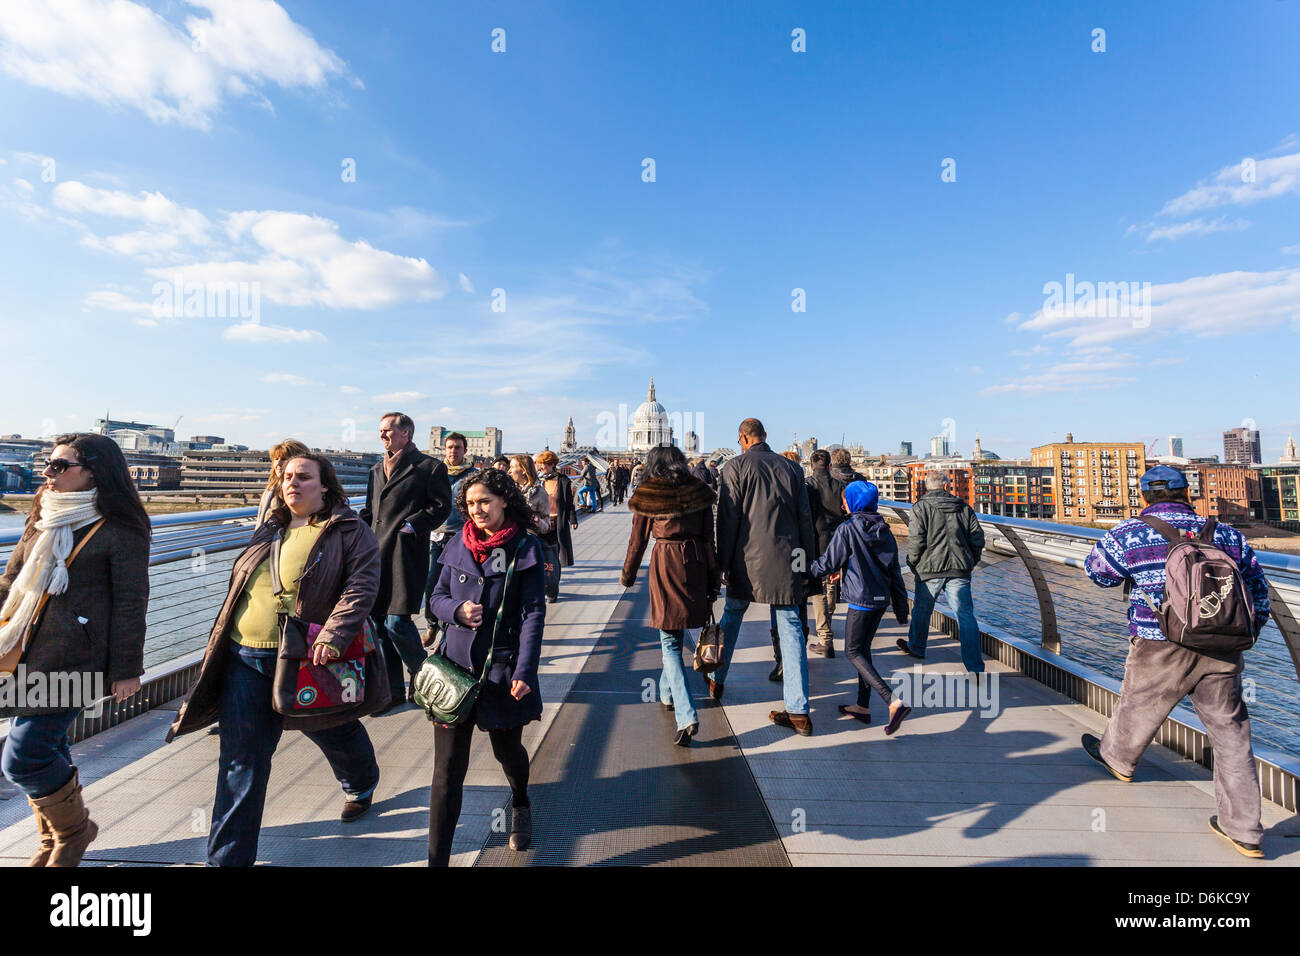 Pedestrians crossing Millennium Bridge, London, England, UK Stock Photo